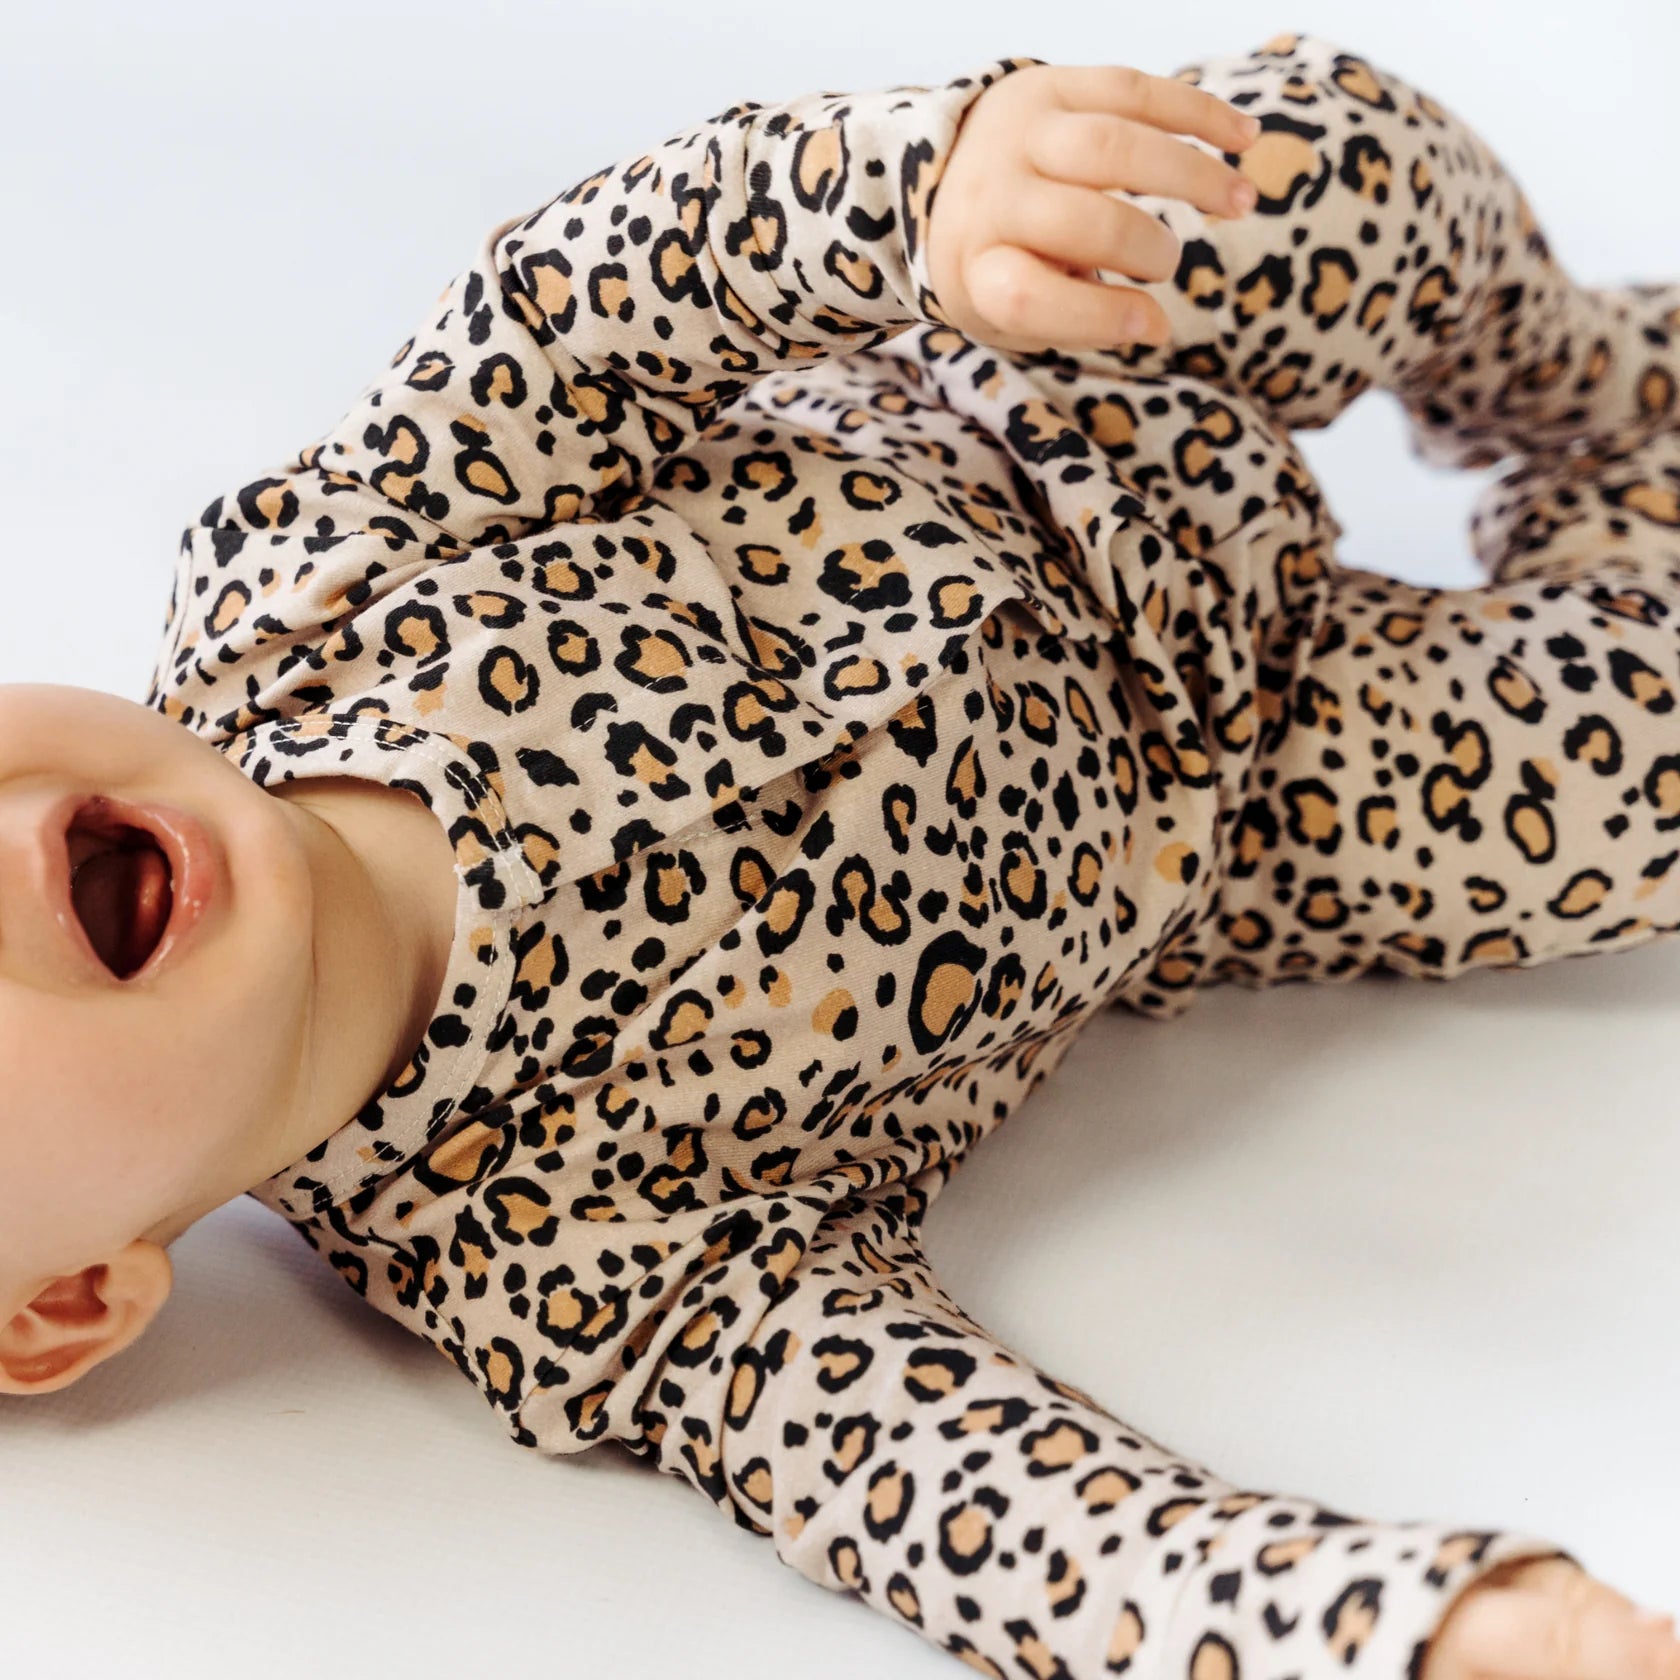 Magnetic Baby Romper - Leopard - Bubbadue